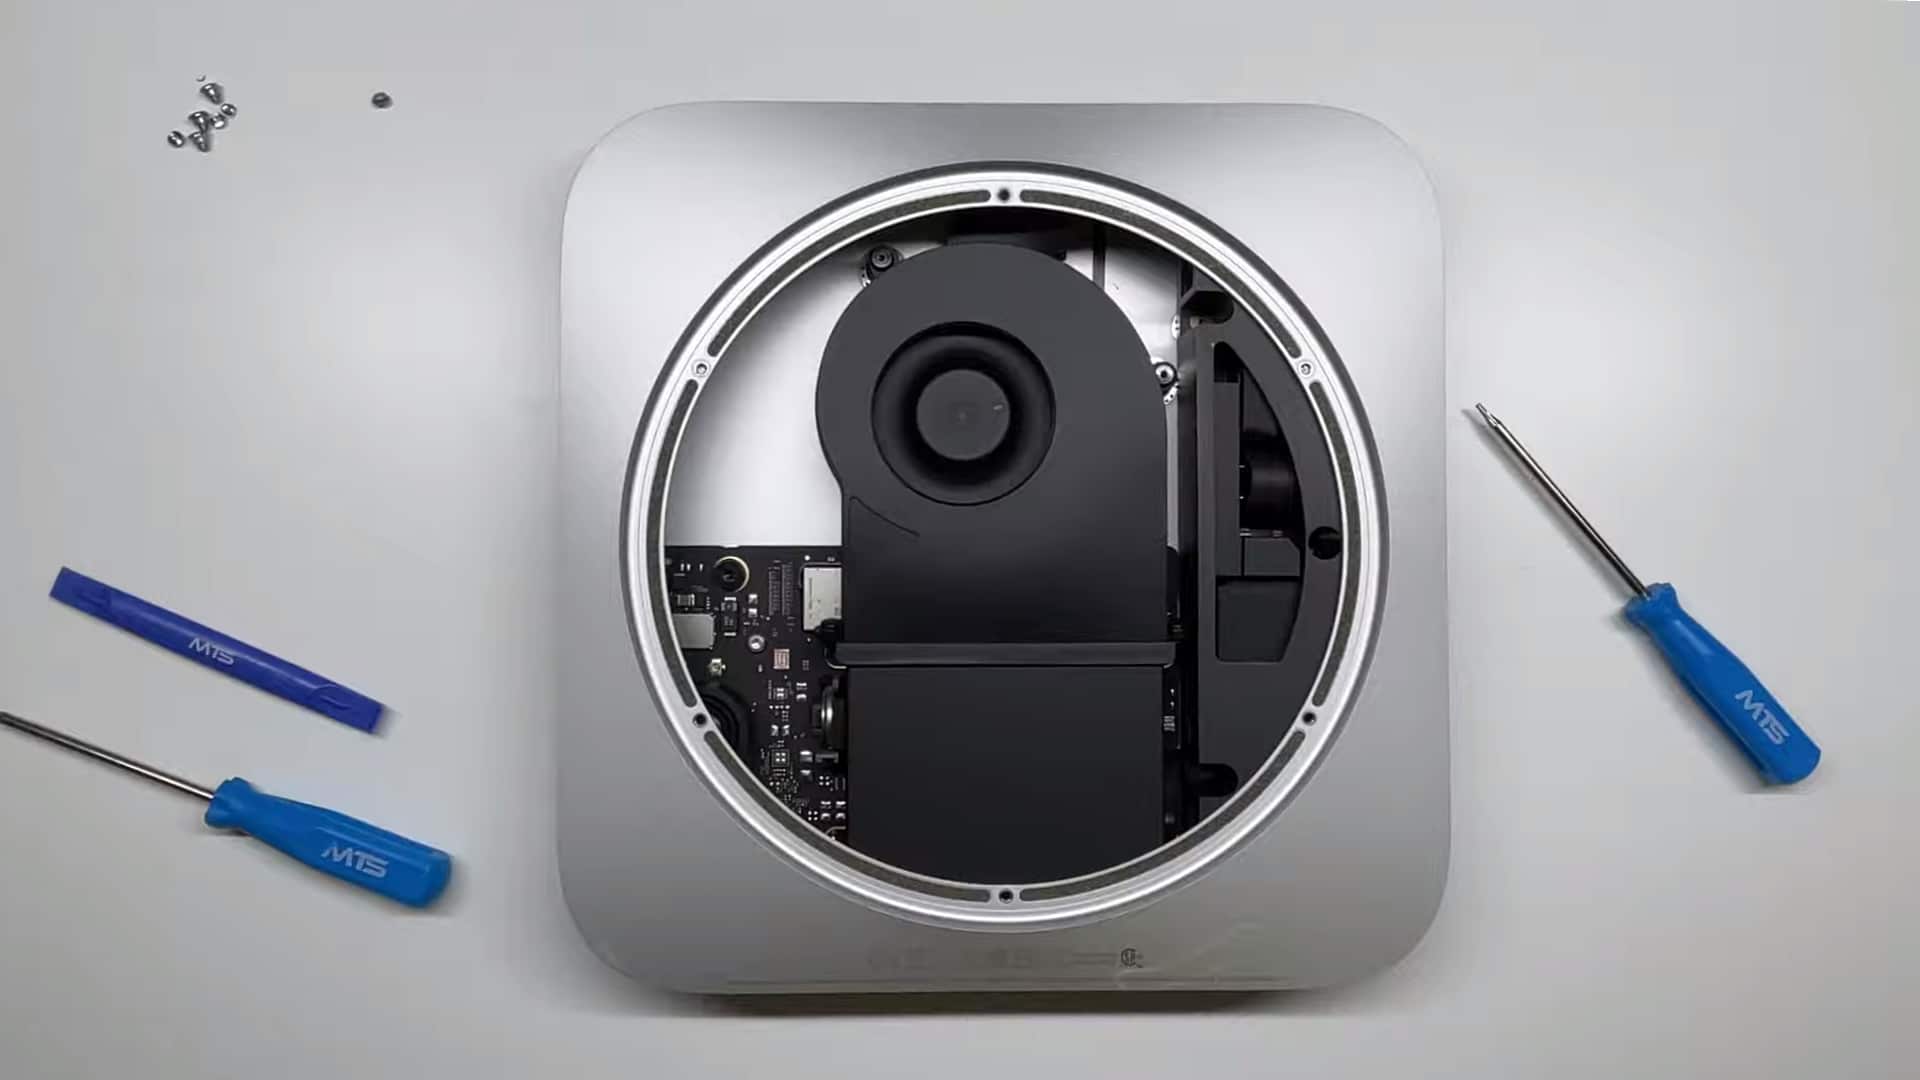 M1 Mac mini Teardown enthüllt kleineres Logic Board und aufgeräumte Interna 47